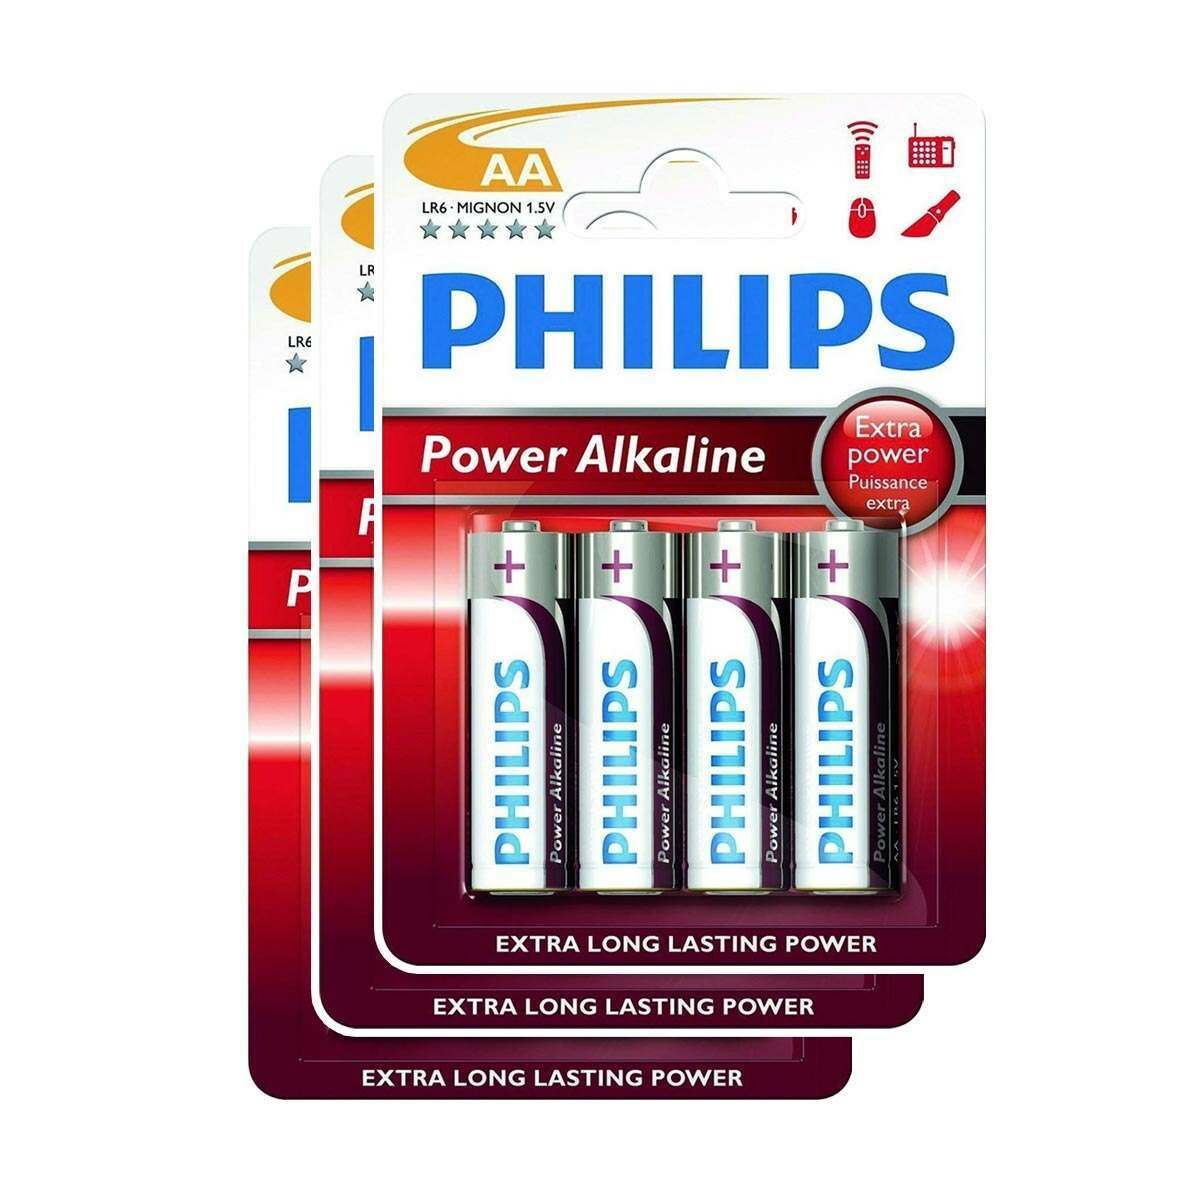 Philips Power Alkaline AA Batteries (Pack of 12) image 1